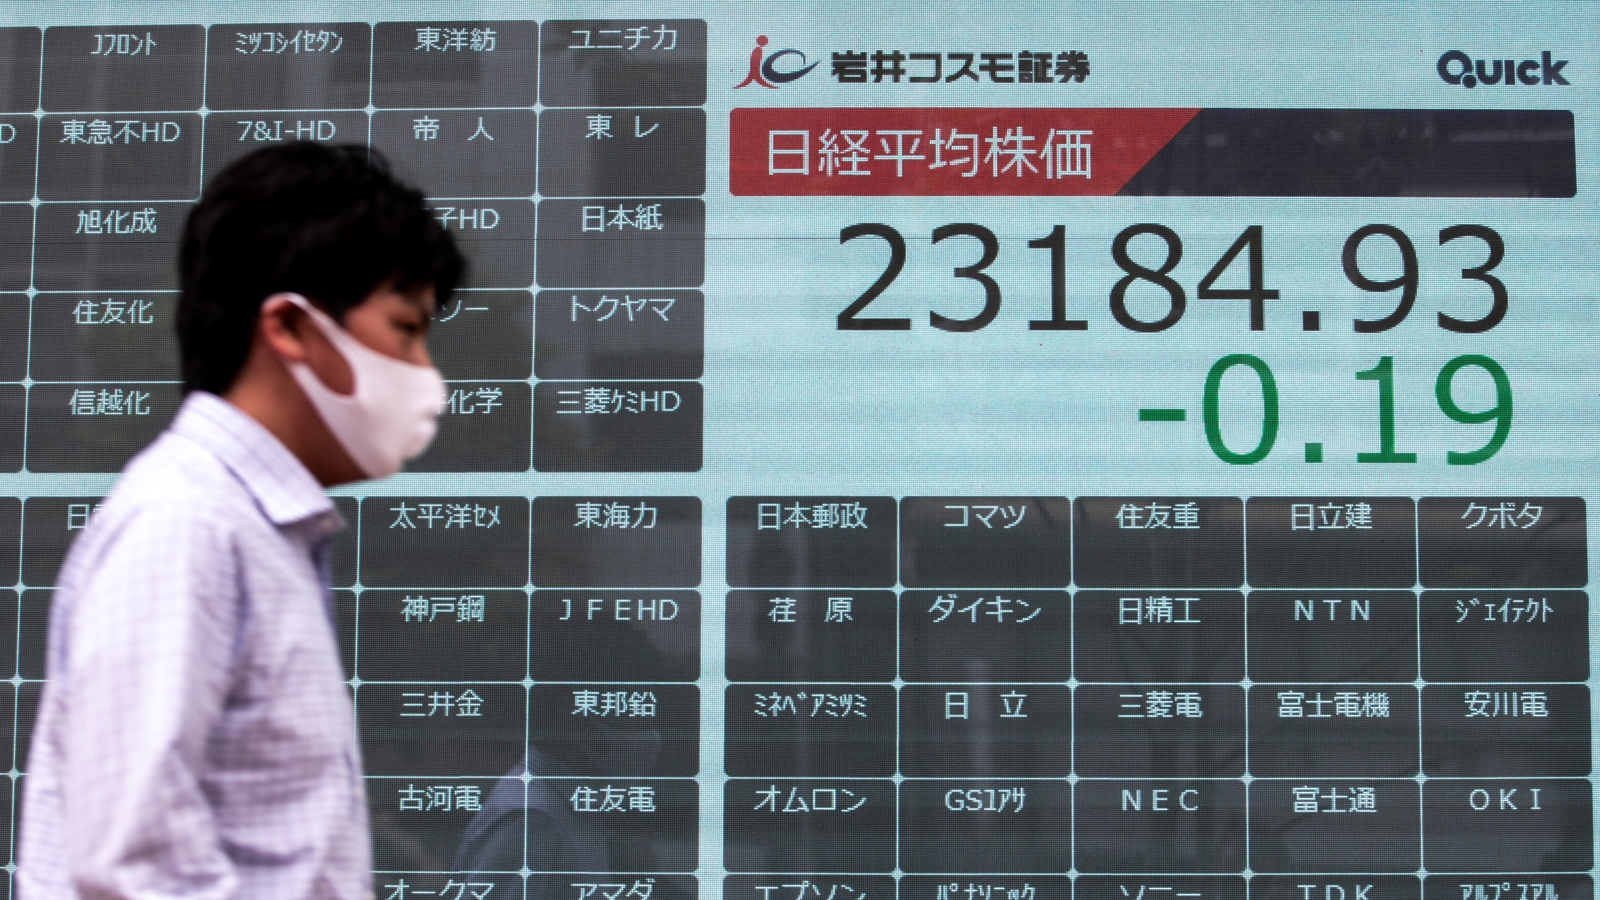 Tokyo Stock Exchange suspends trade after major glitch